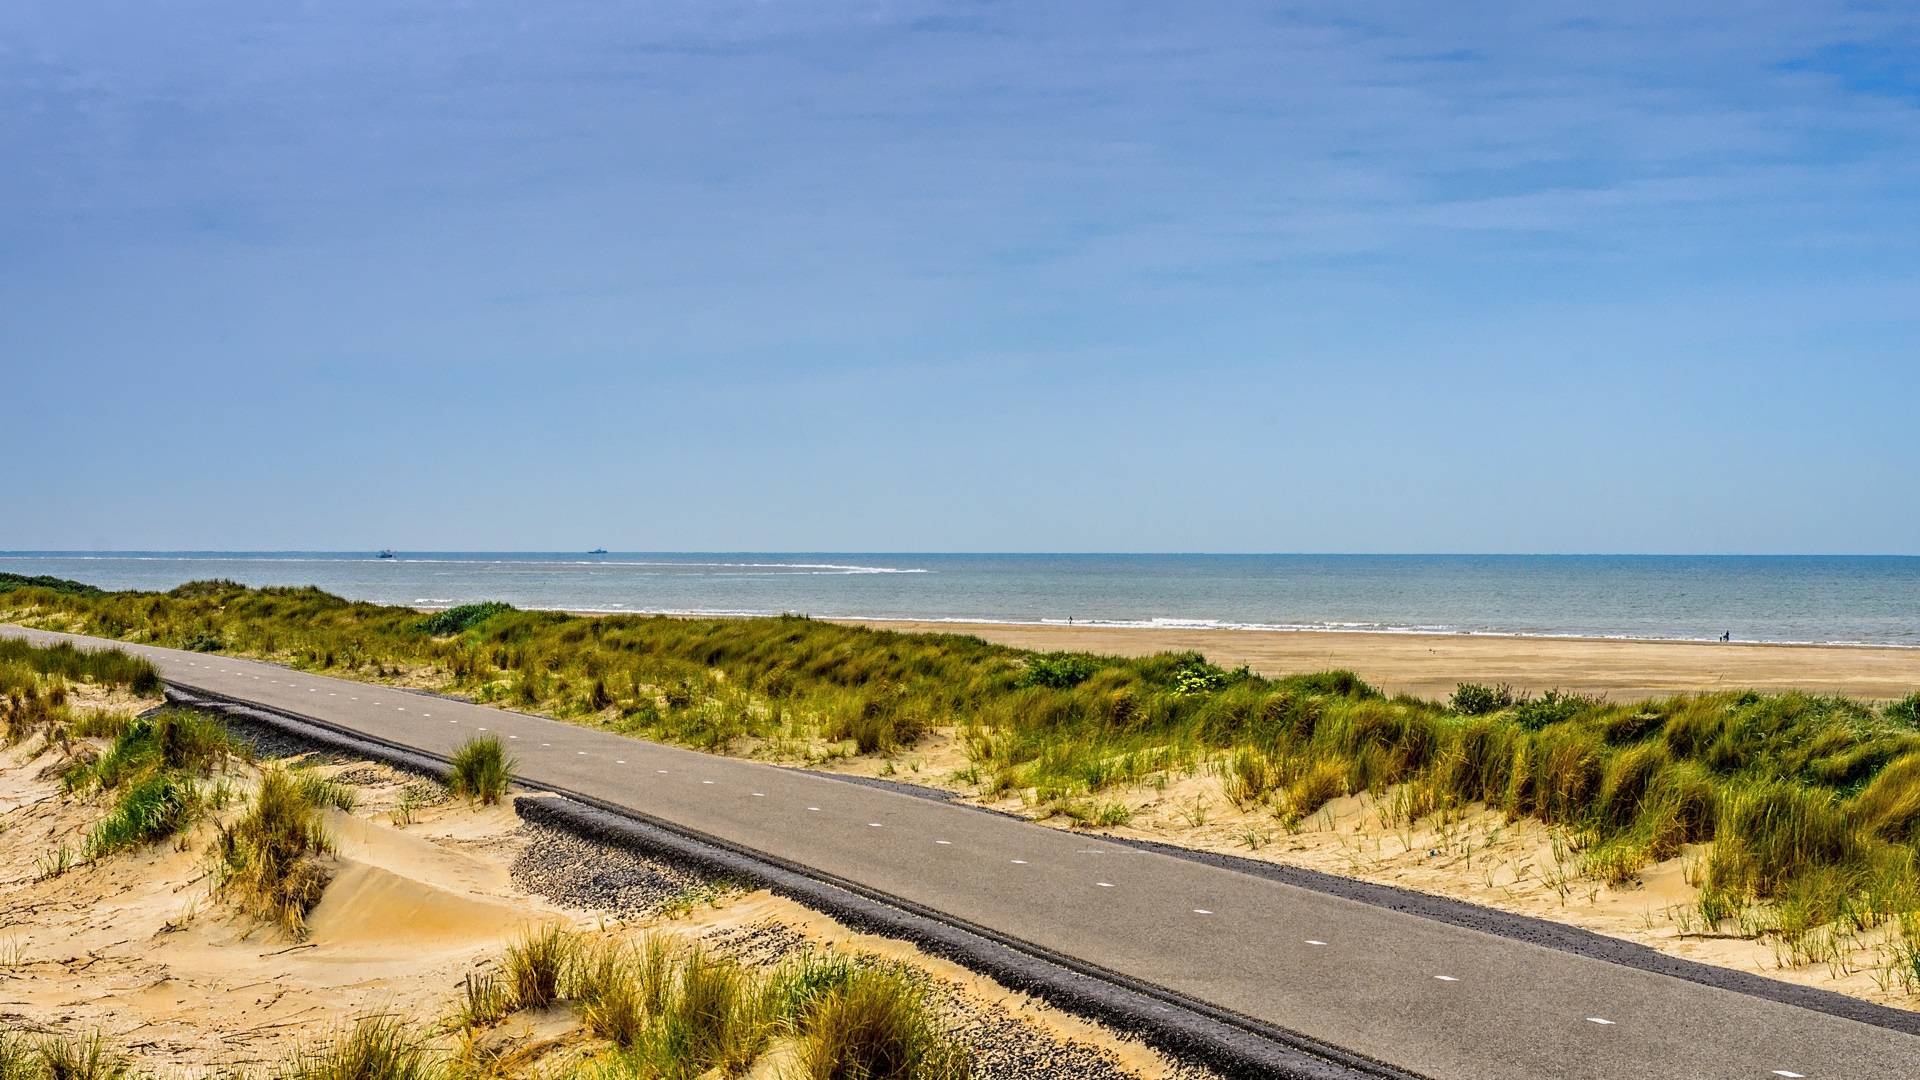 Bike path along coast Zeeland_HDR